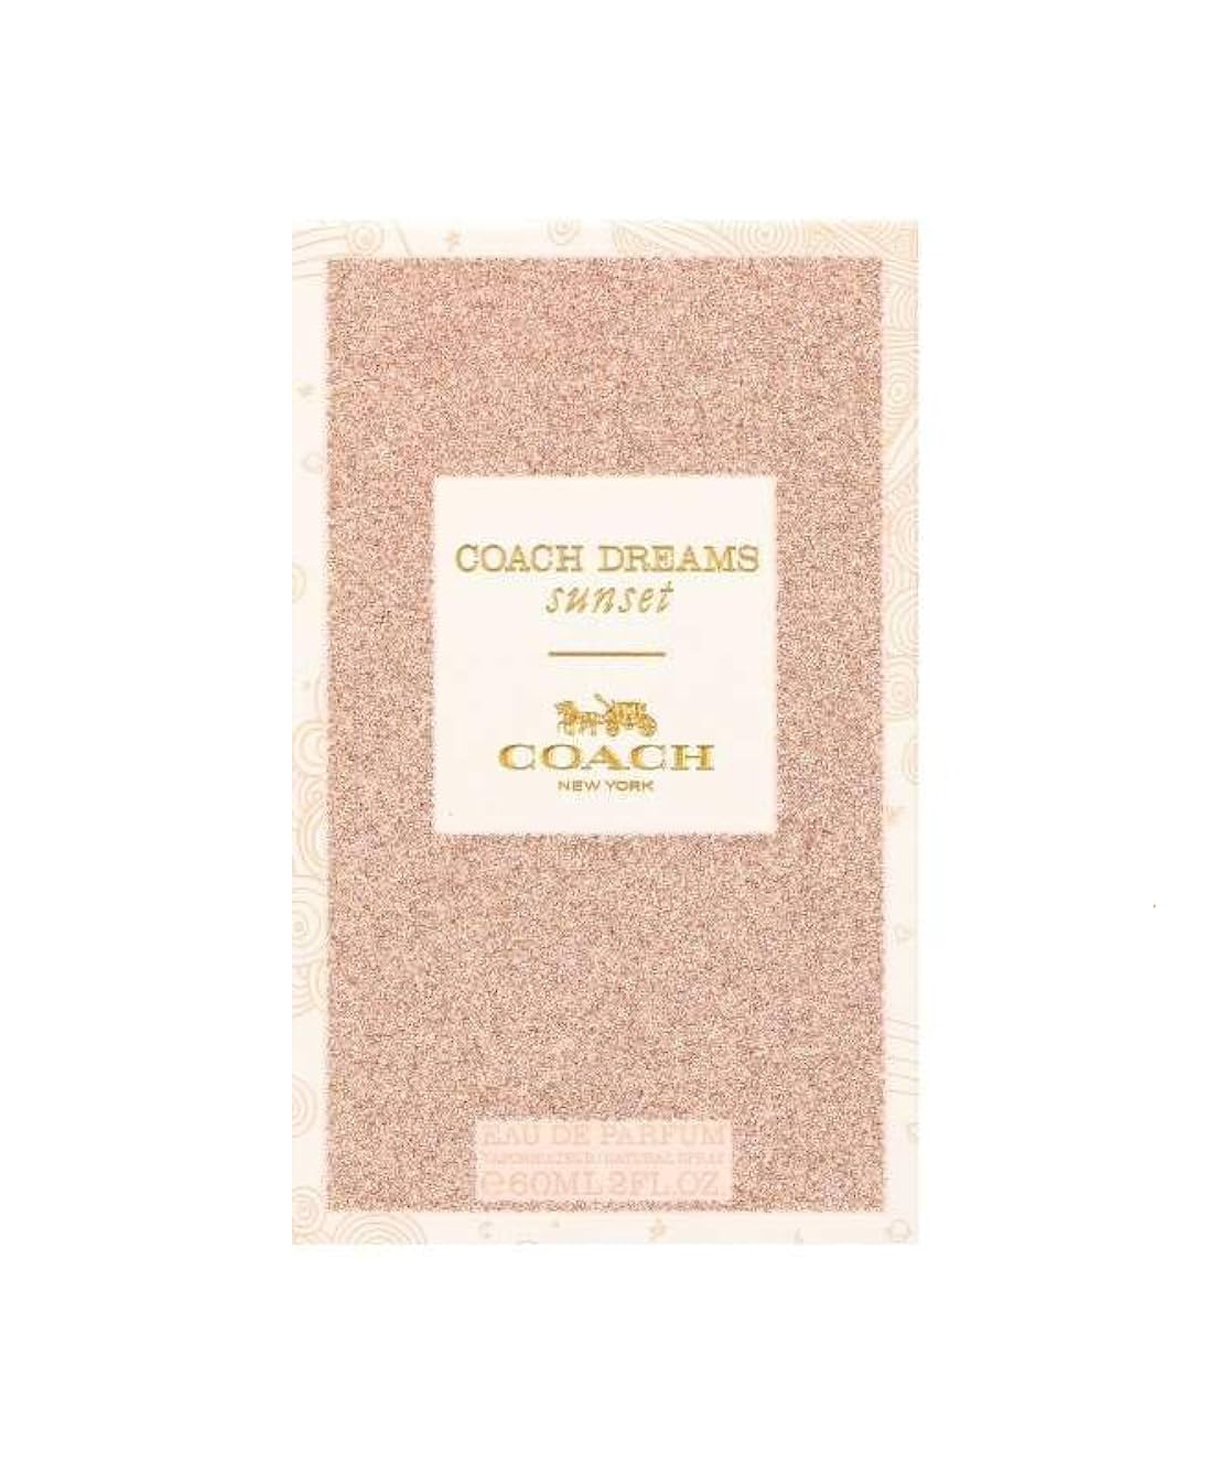 Perfume «Coach» Dreams Sunset, for women, 60 ml